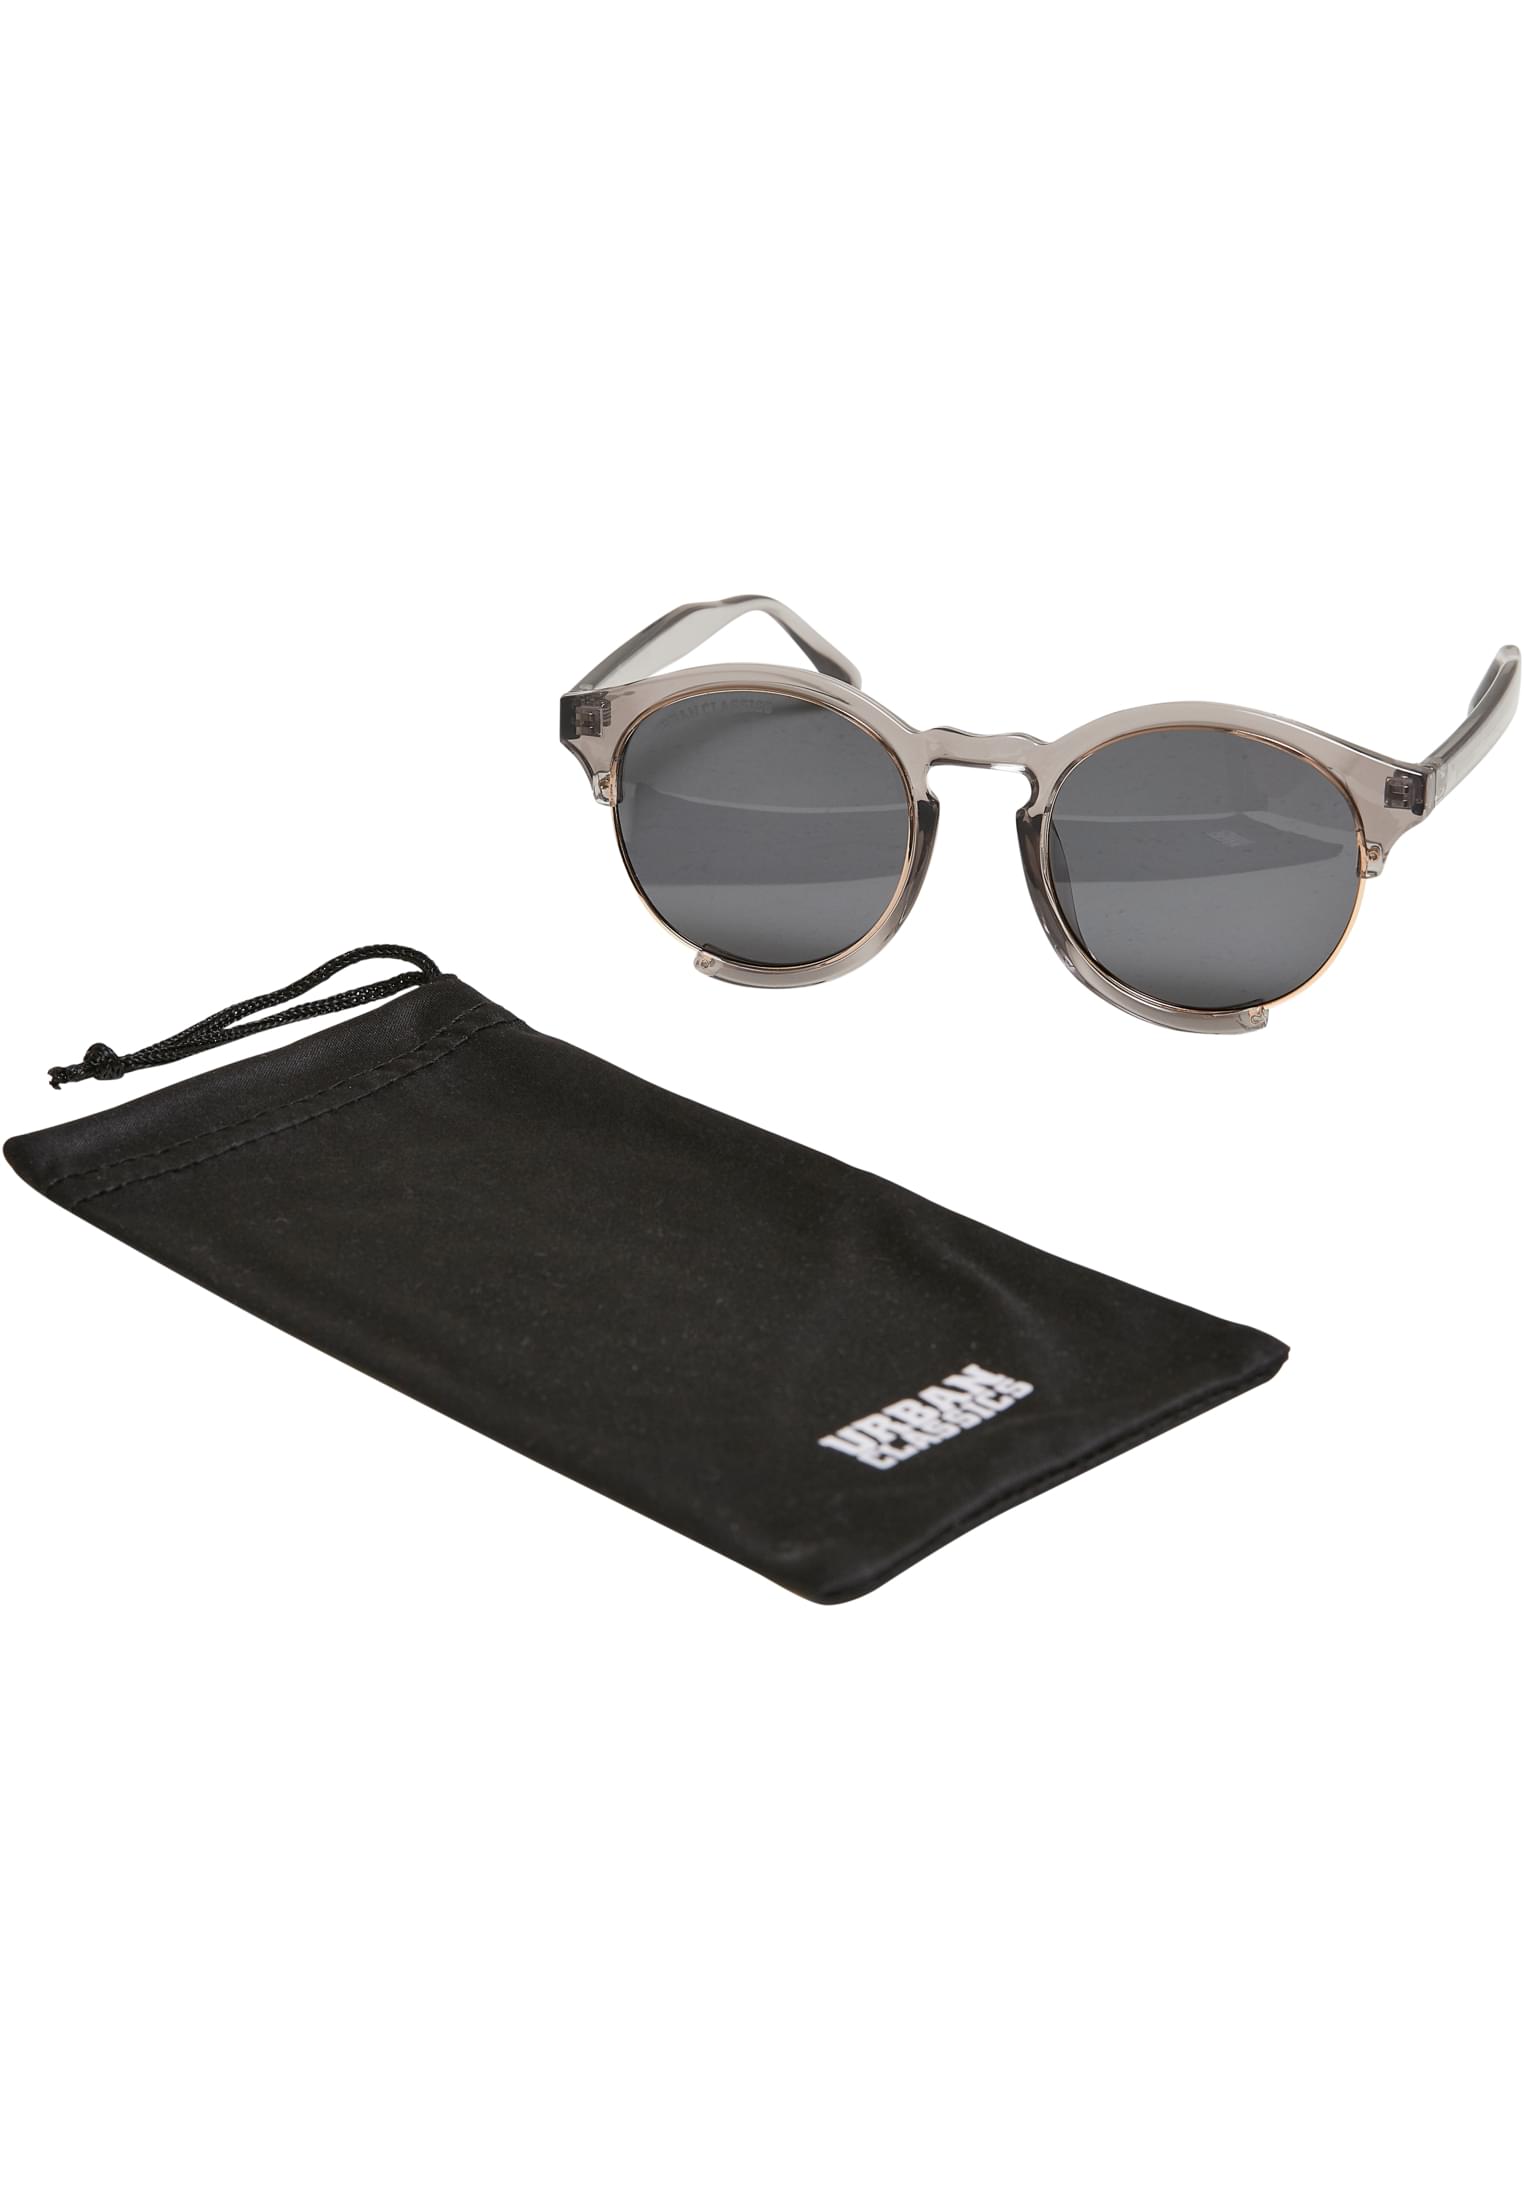 Sunglasses Coral Bay grey